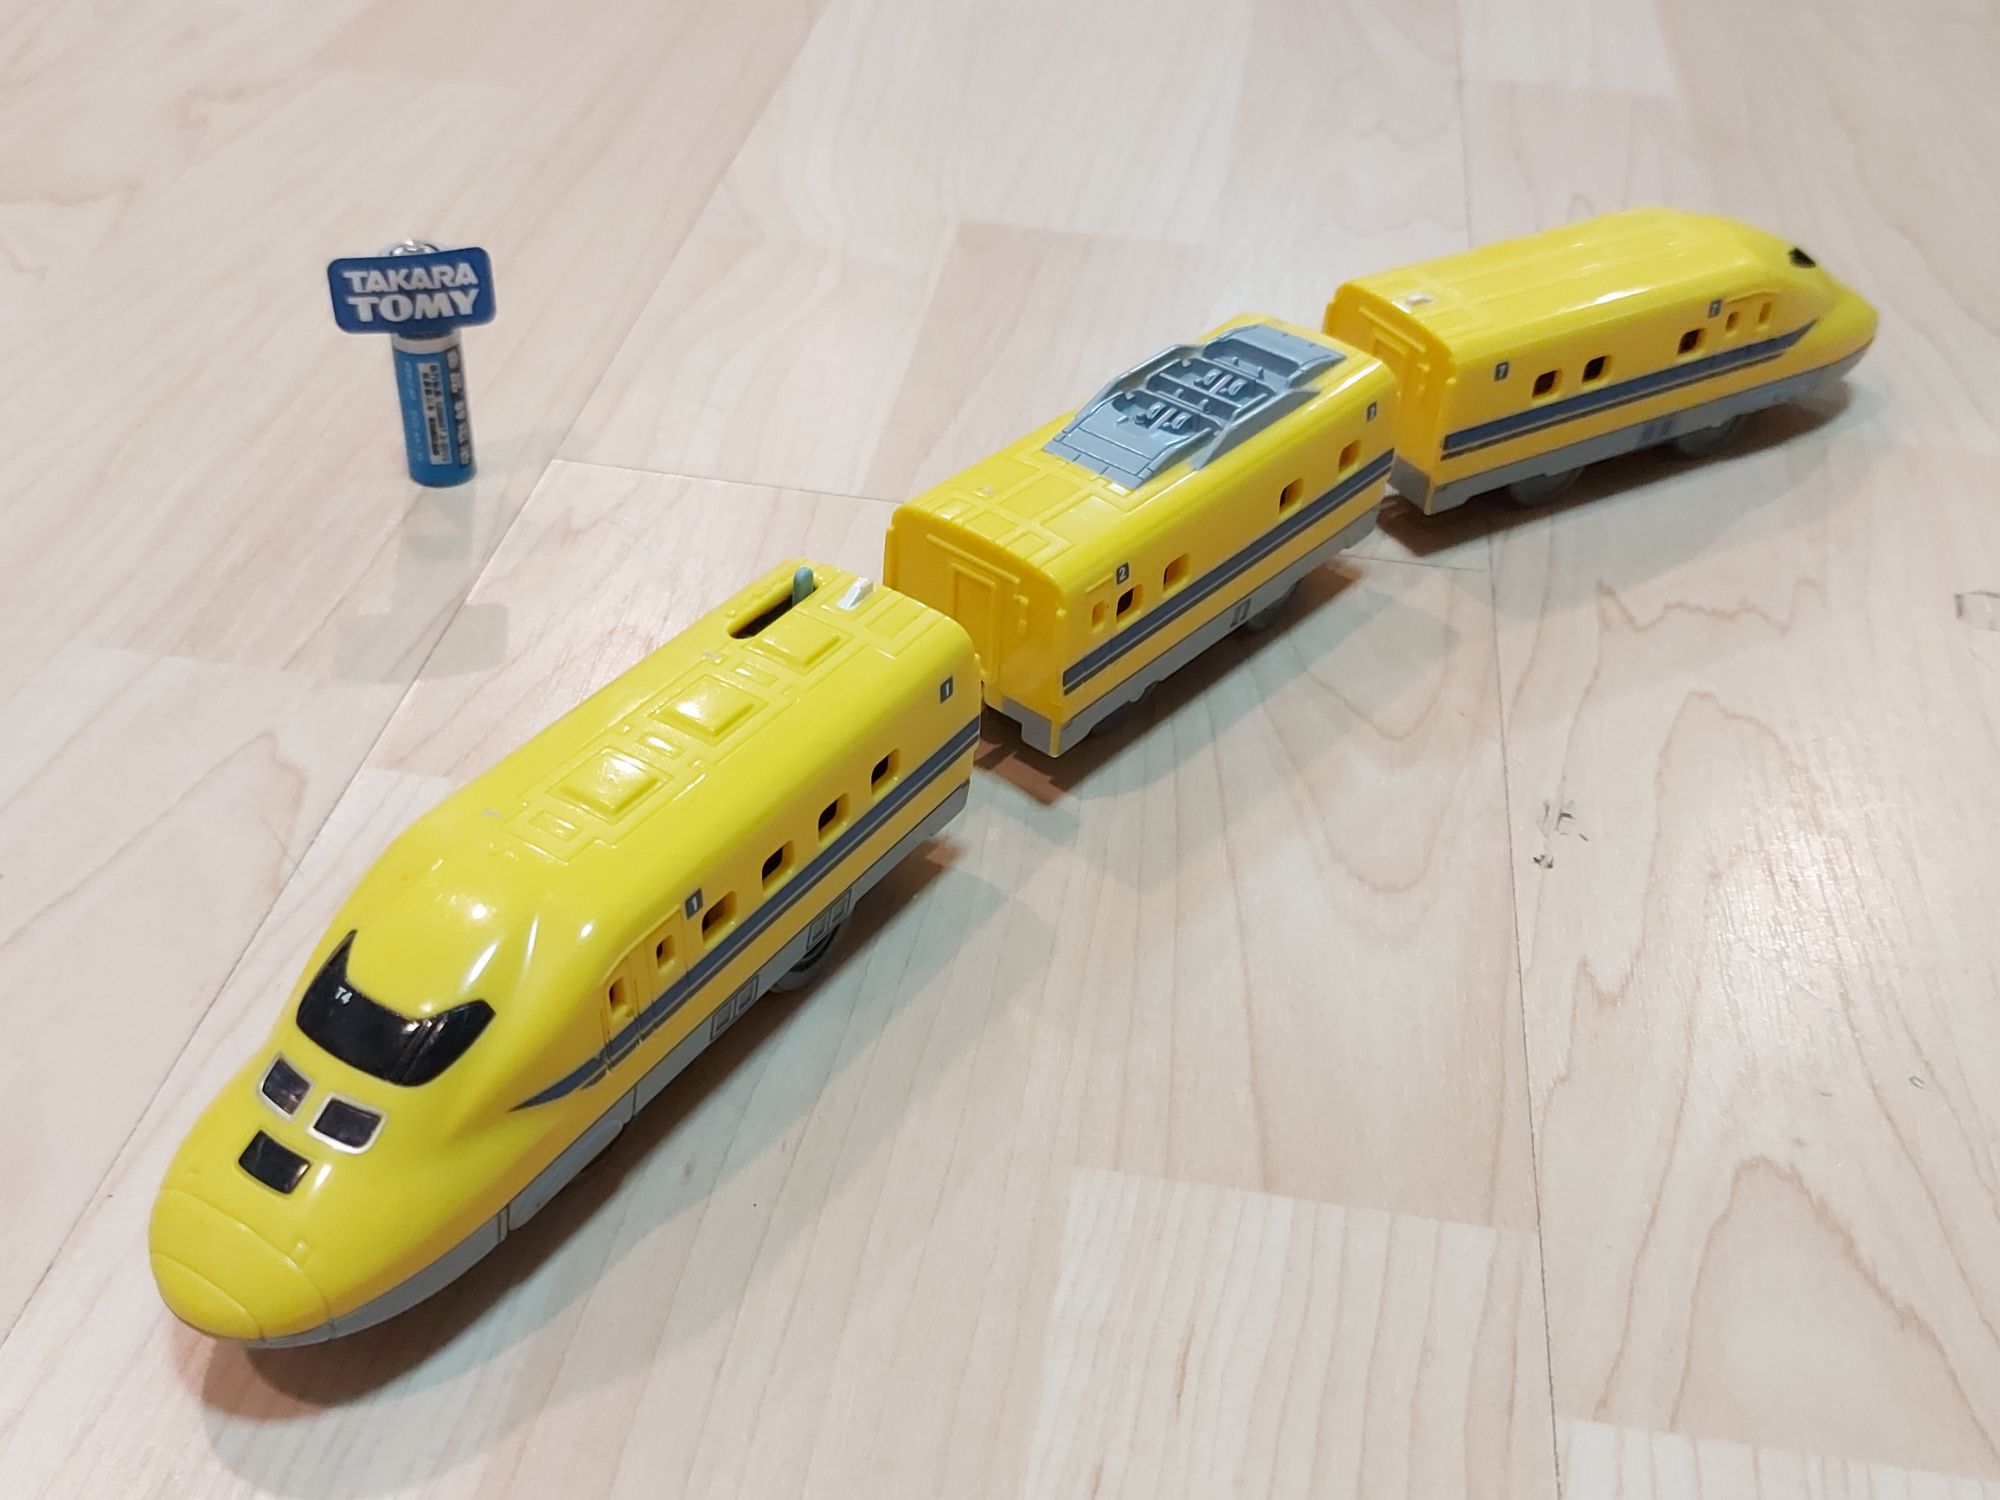 Tomy รถไฟ ชินคันเซ็น Doctor yellow ลิขสิทธิ์แท้ แบรนด์ takara tomy
ผ่านการทดสอบและเช็คระบบ มือ ส อง สภาพ ดี